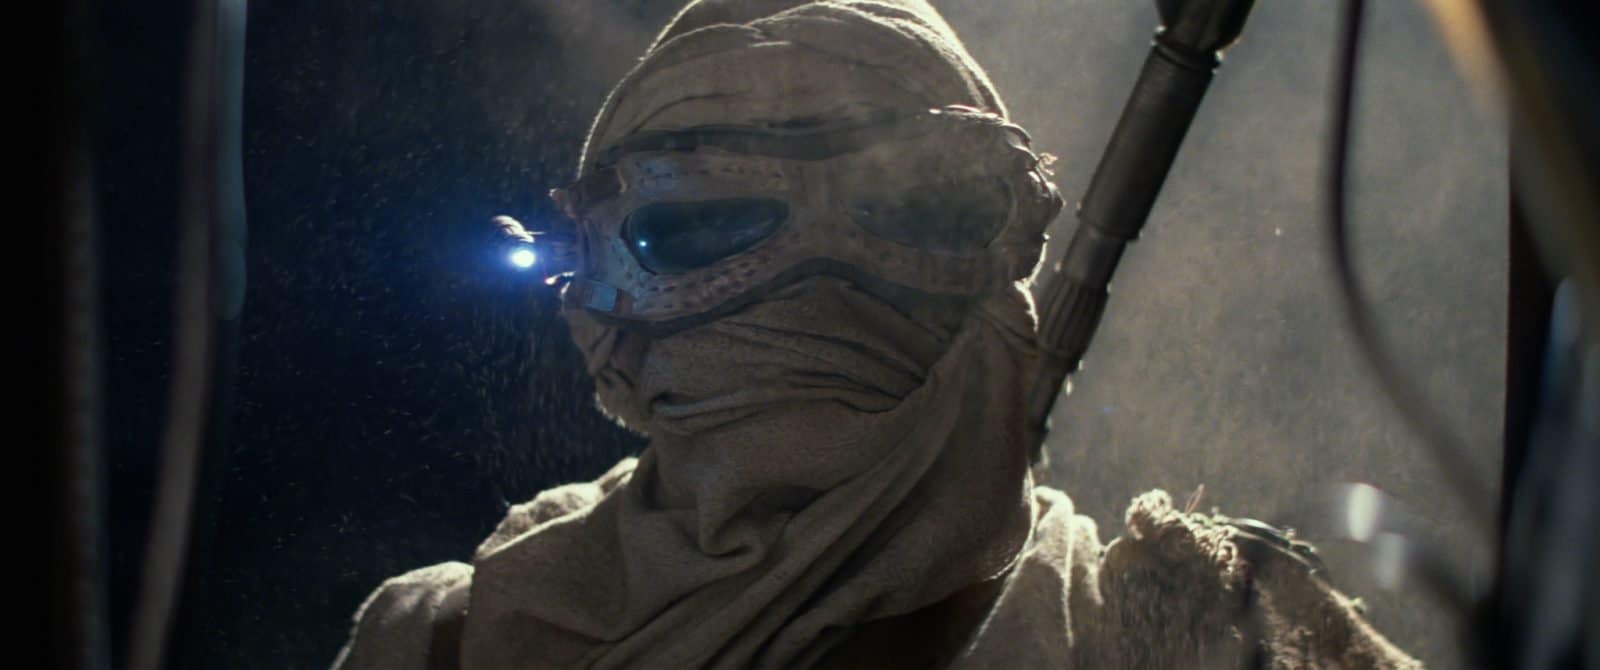 Star Wars VII The Force Awakens 1 - Rey Skywalker with Eyewear